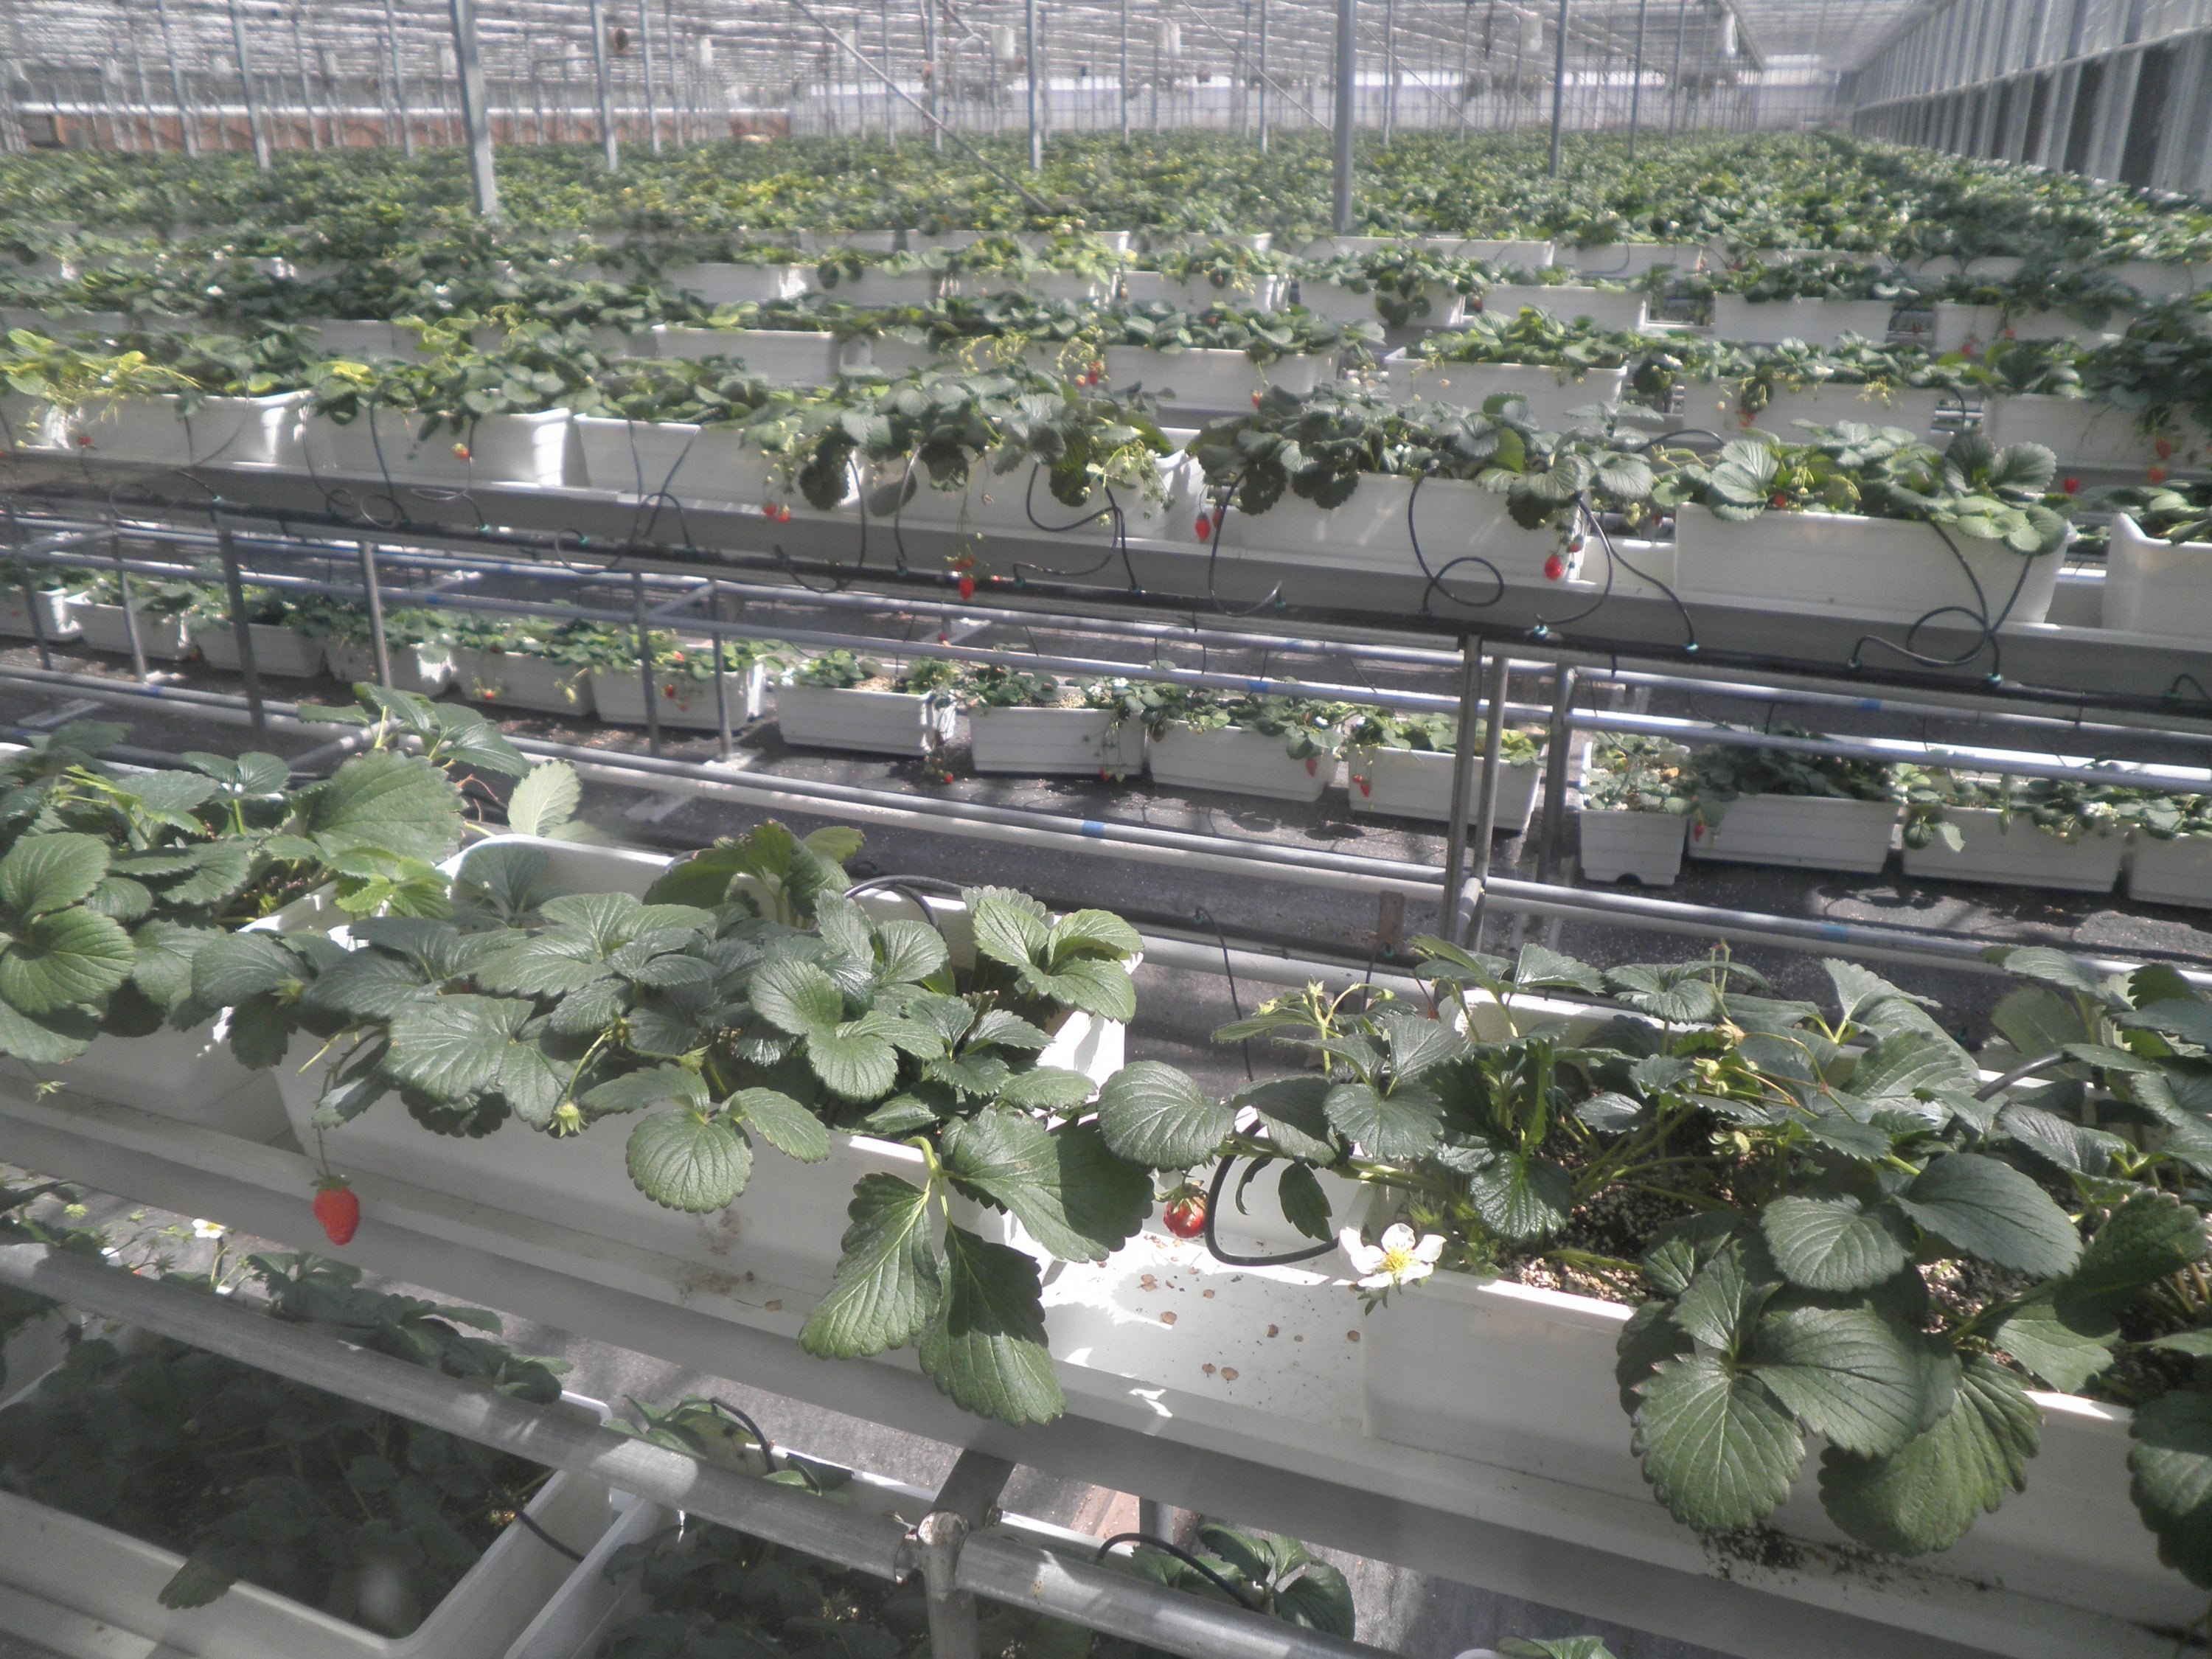 Inside a greenhouse